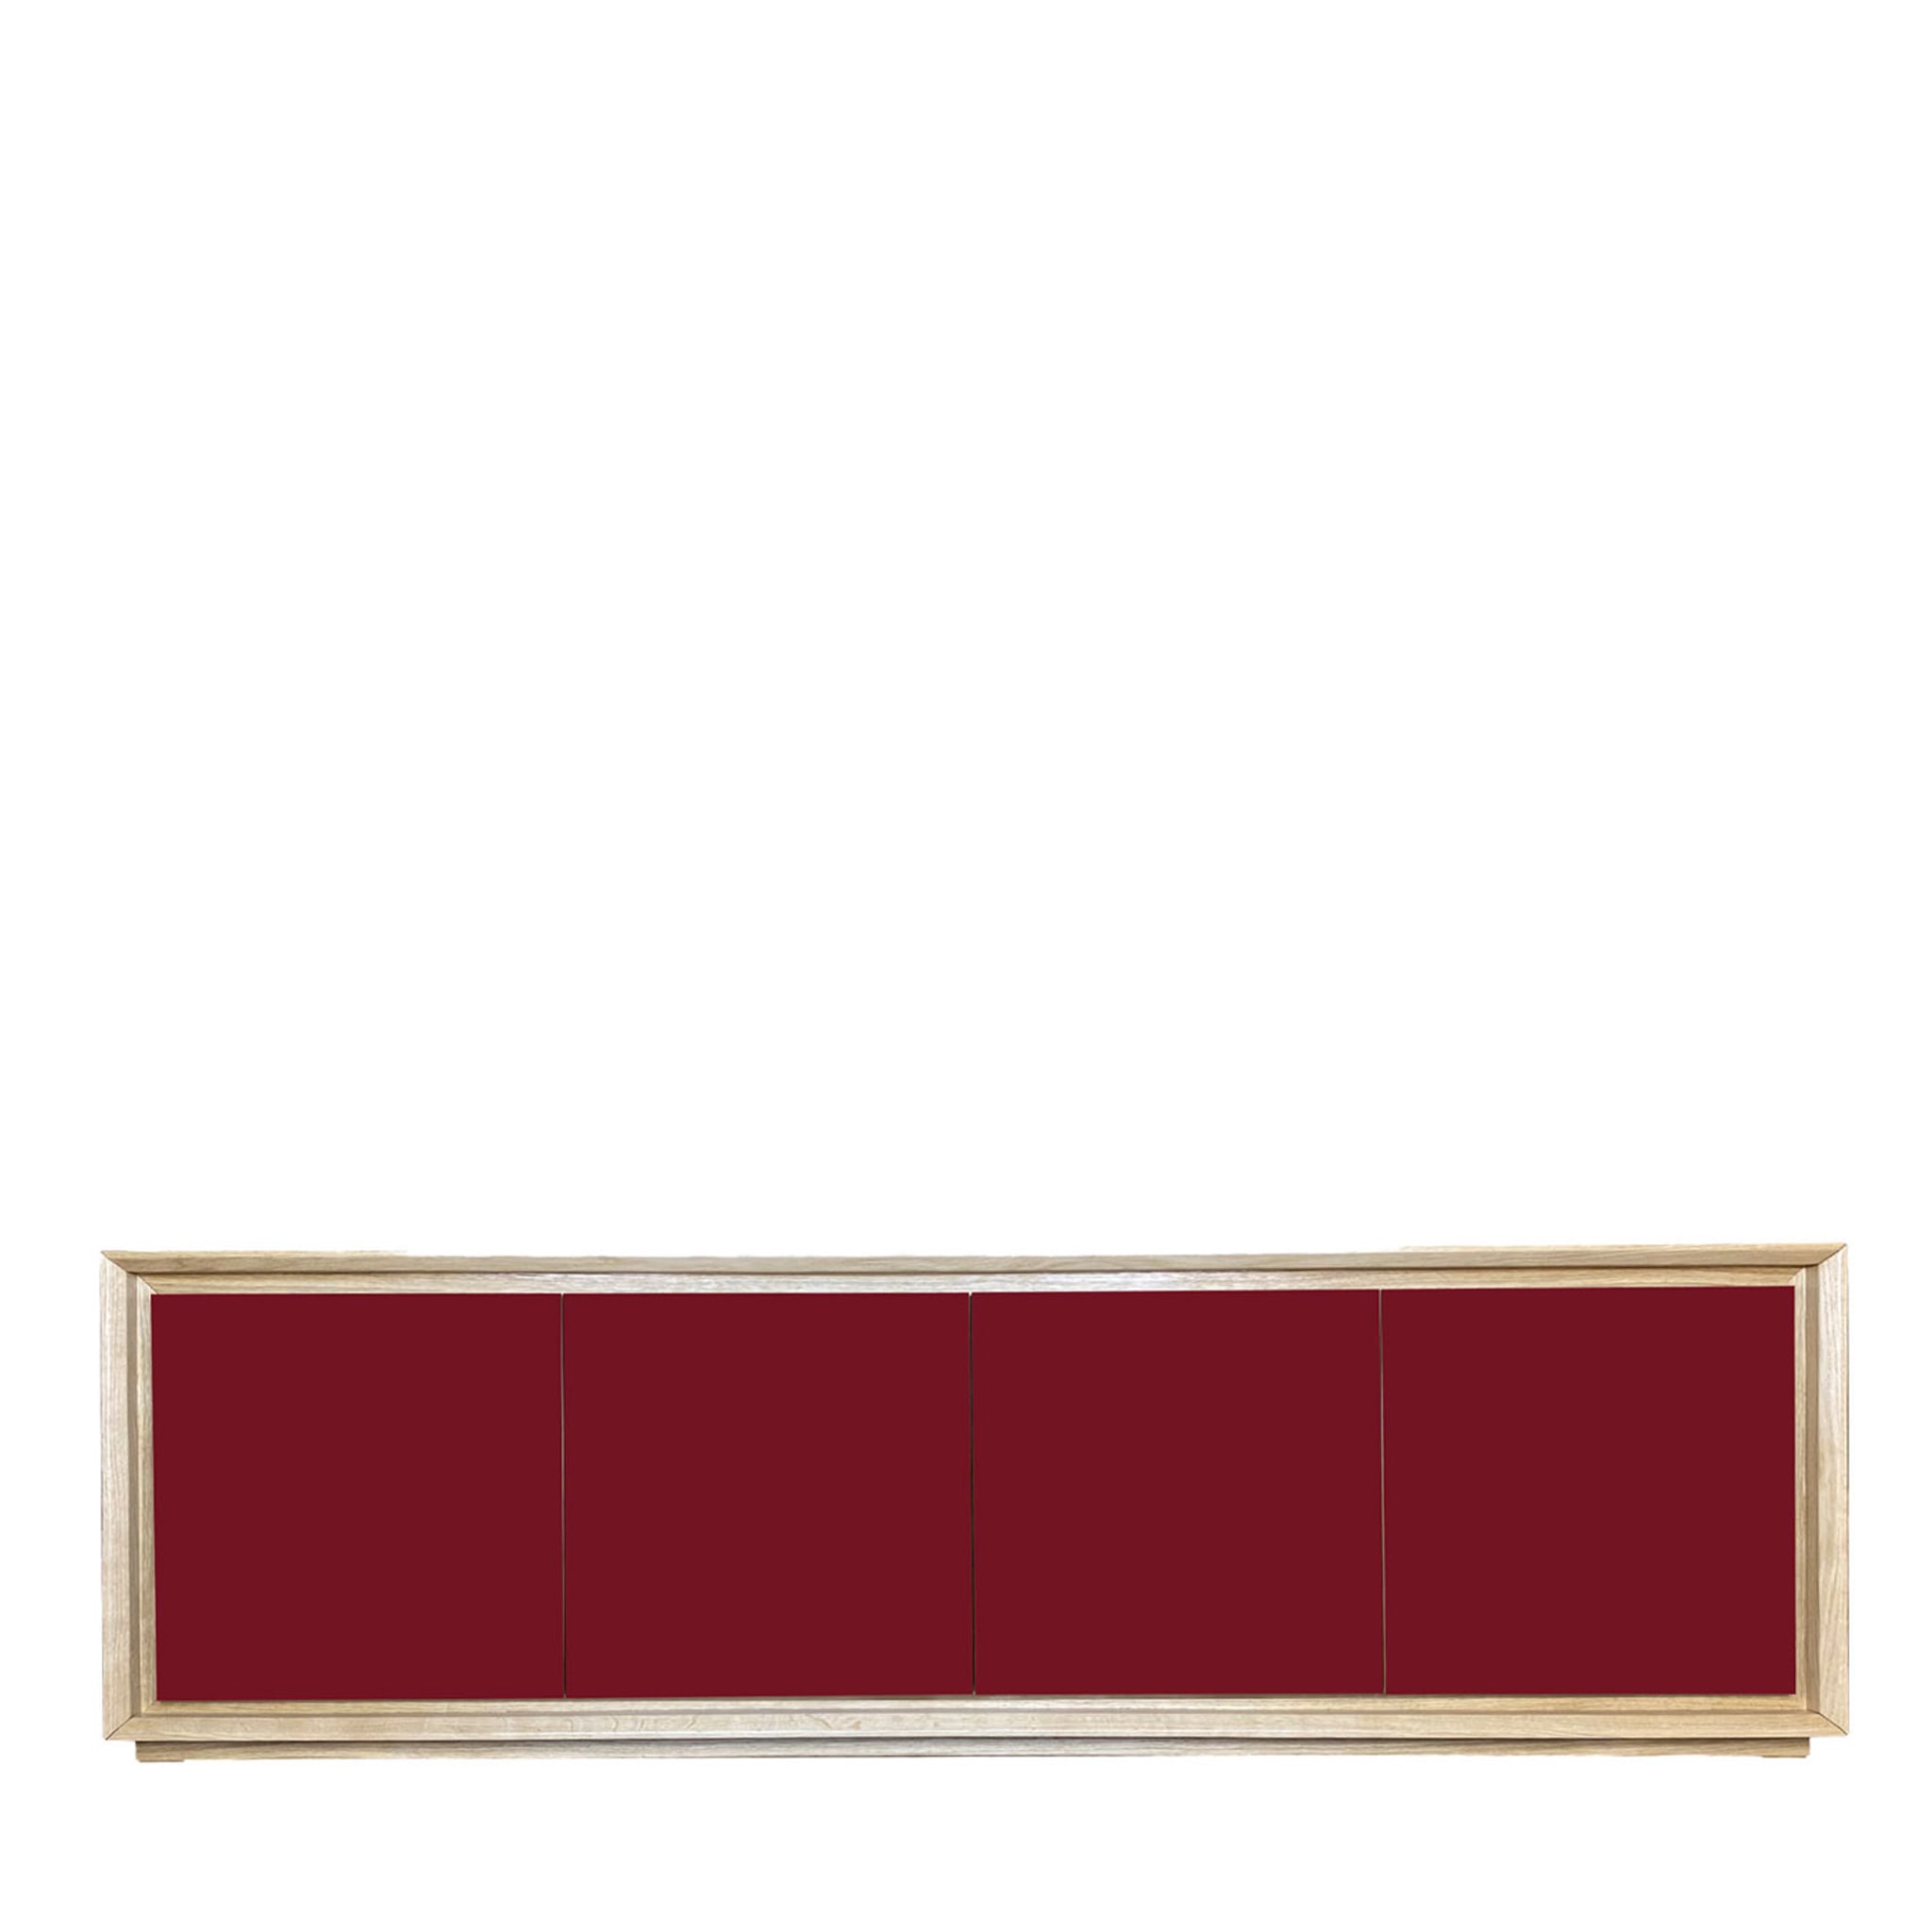 Rubino 3-türiges rubinrotes Sideboard von Mascia Meccani - Hauptansicht